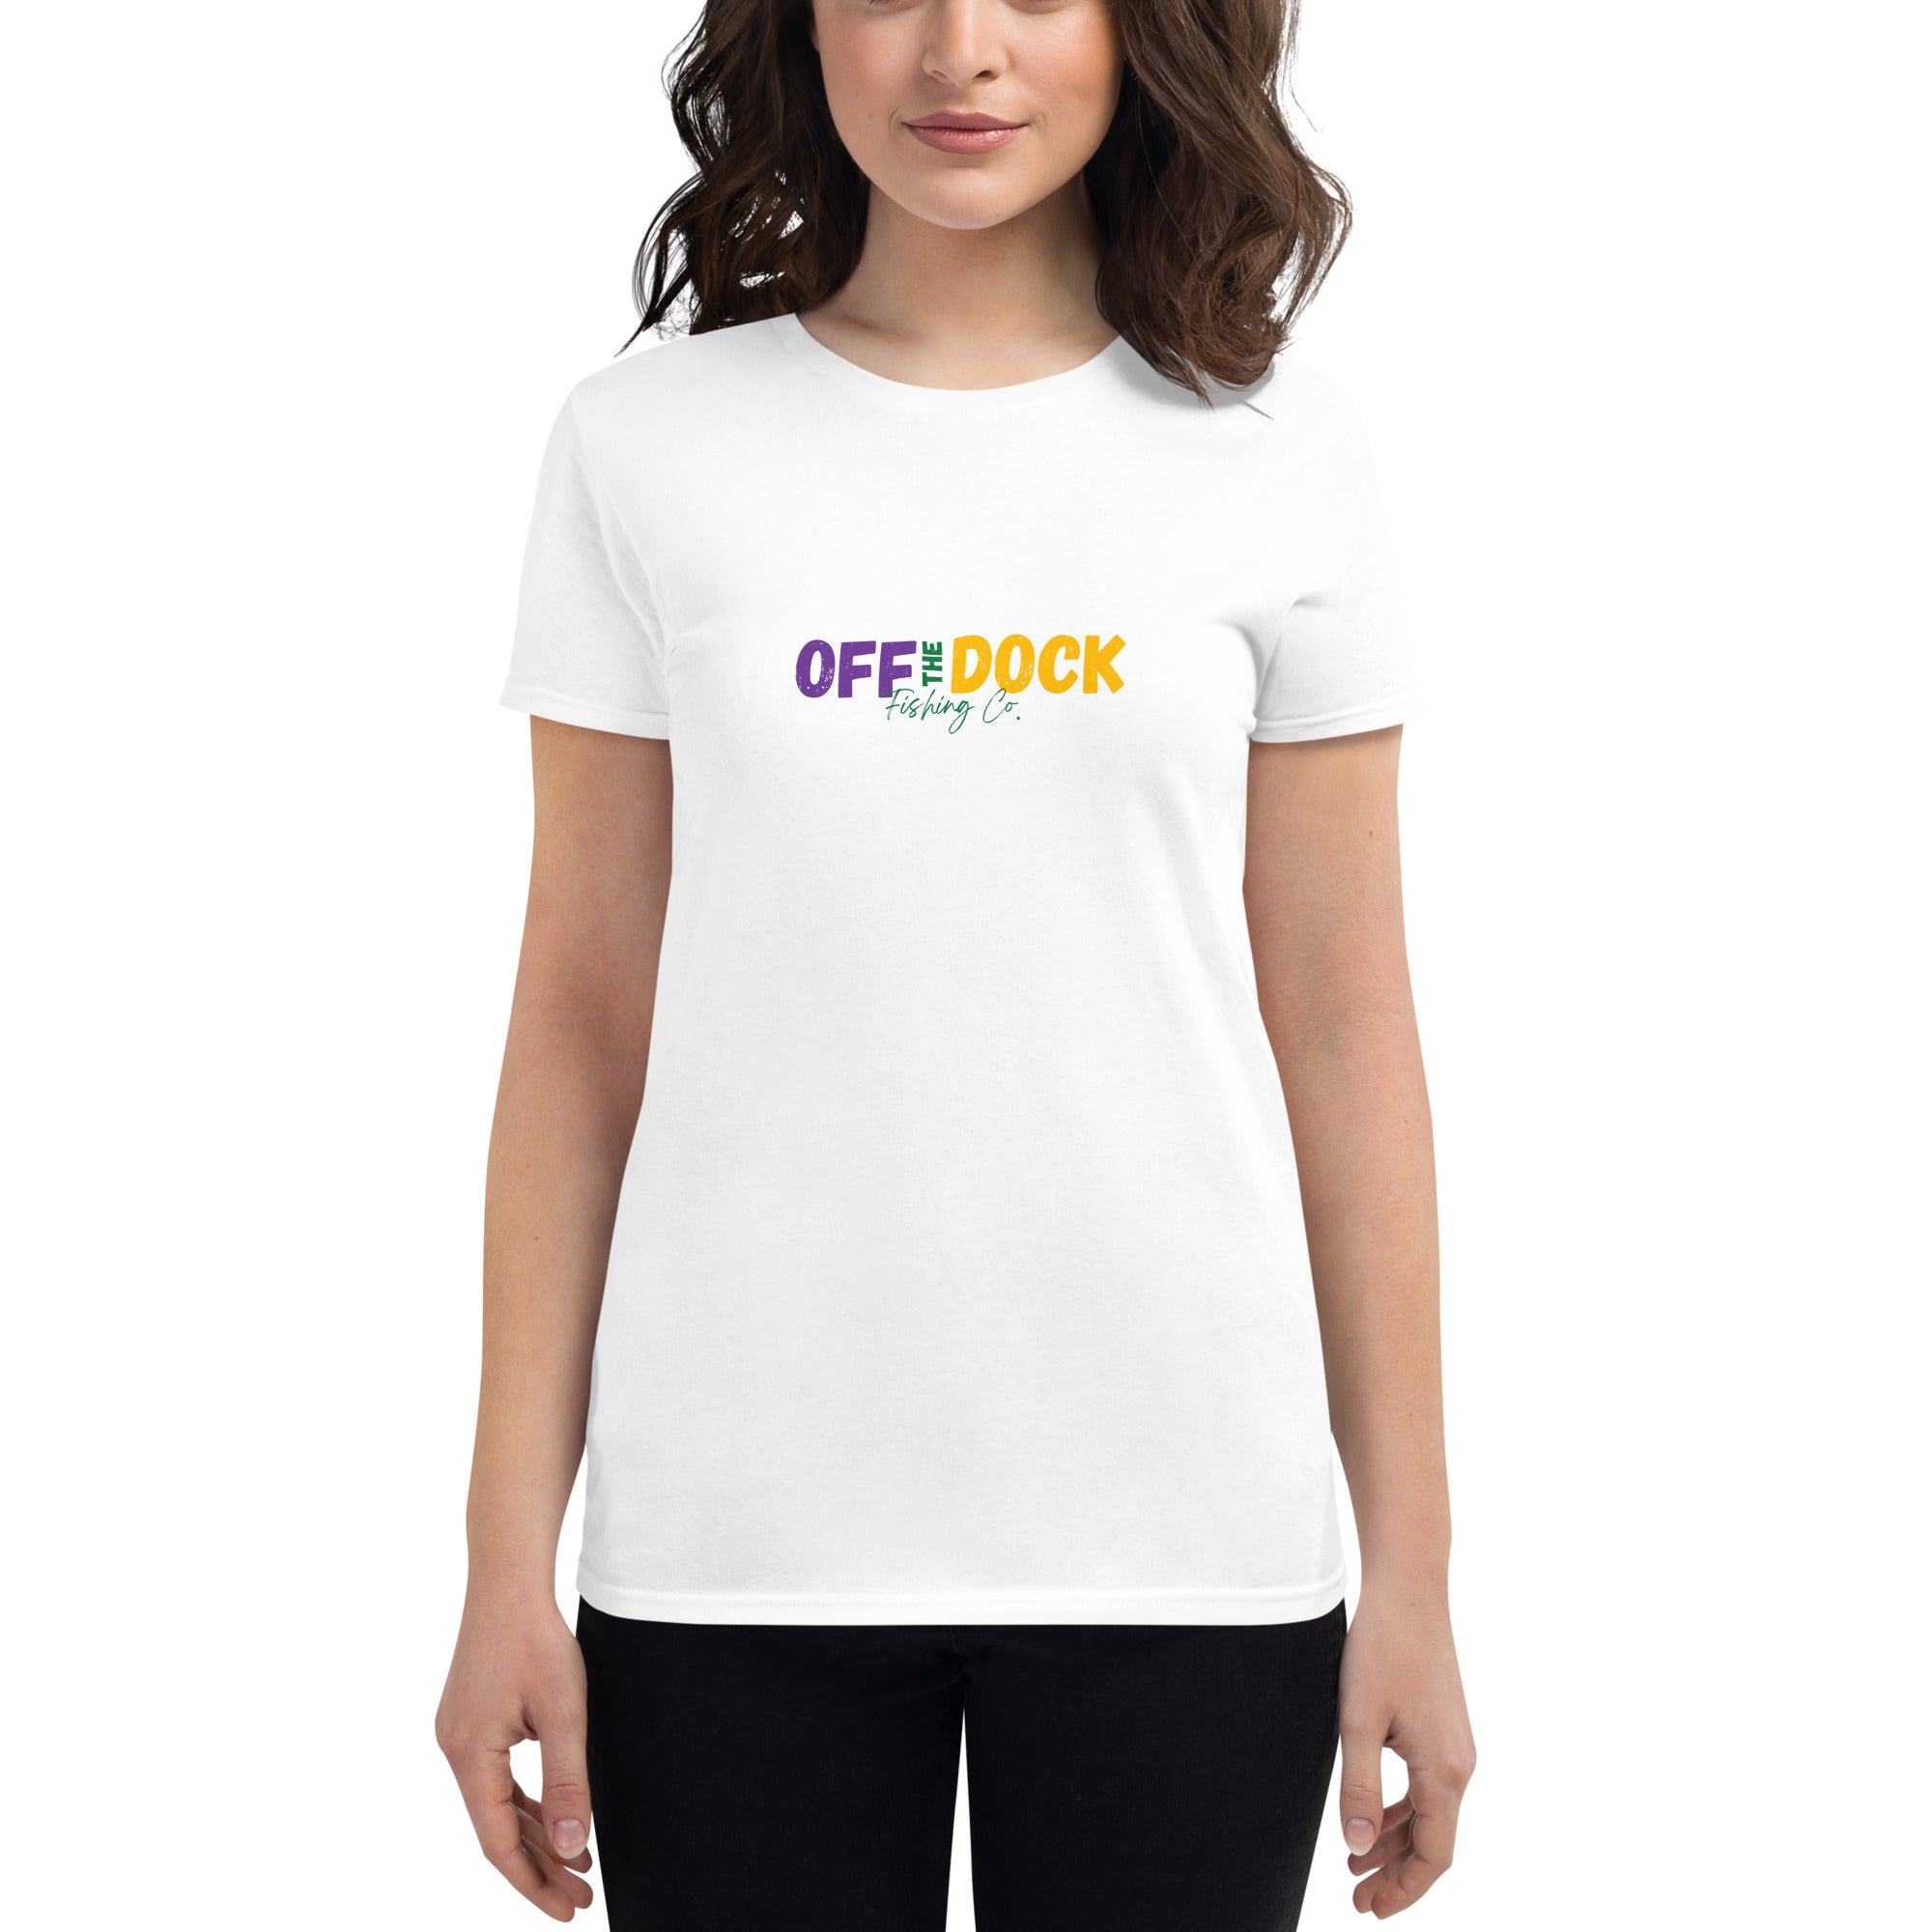 OTD Mardi Gras Women's short sleeve t-shirt